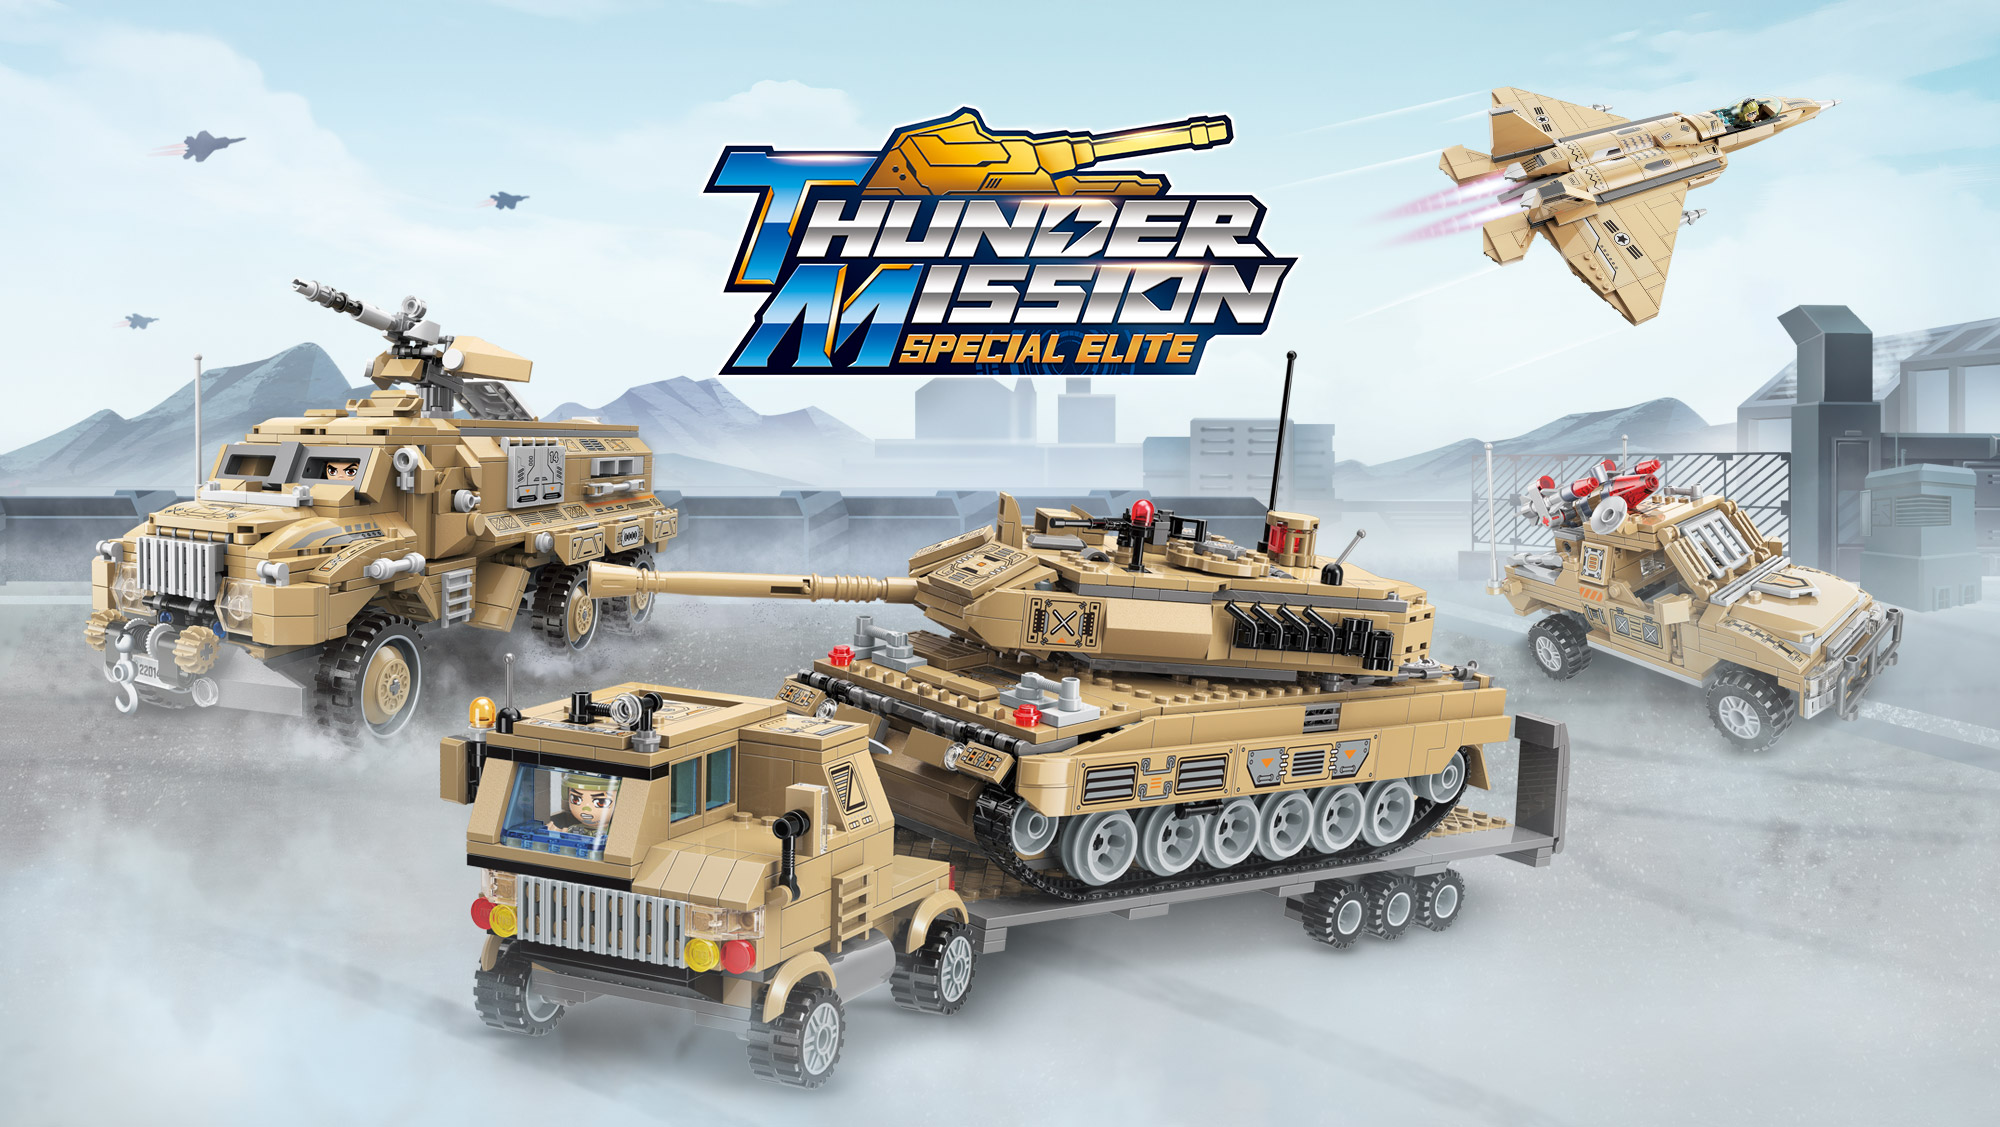 Thunder Mission - Special Elit